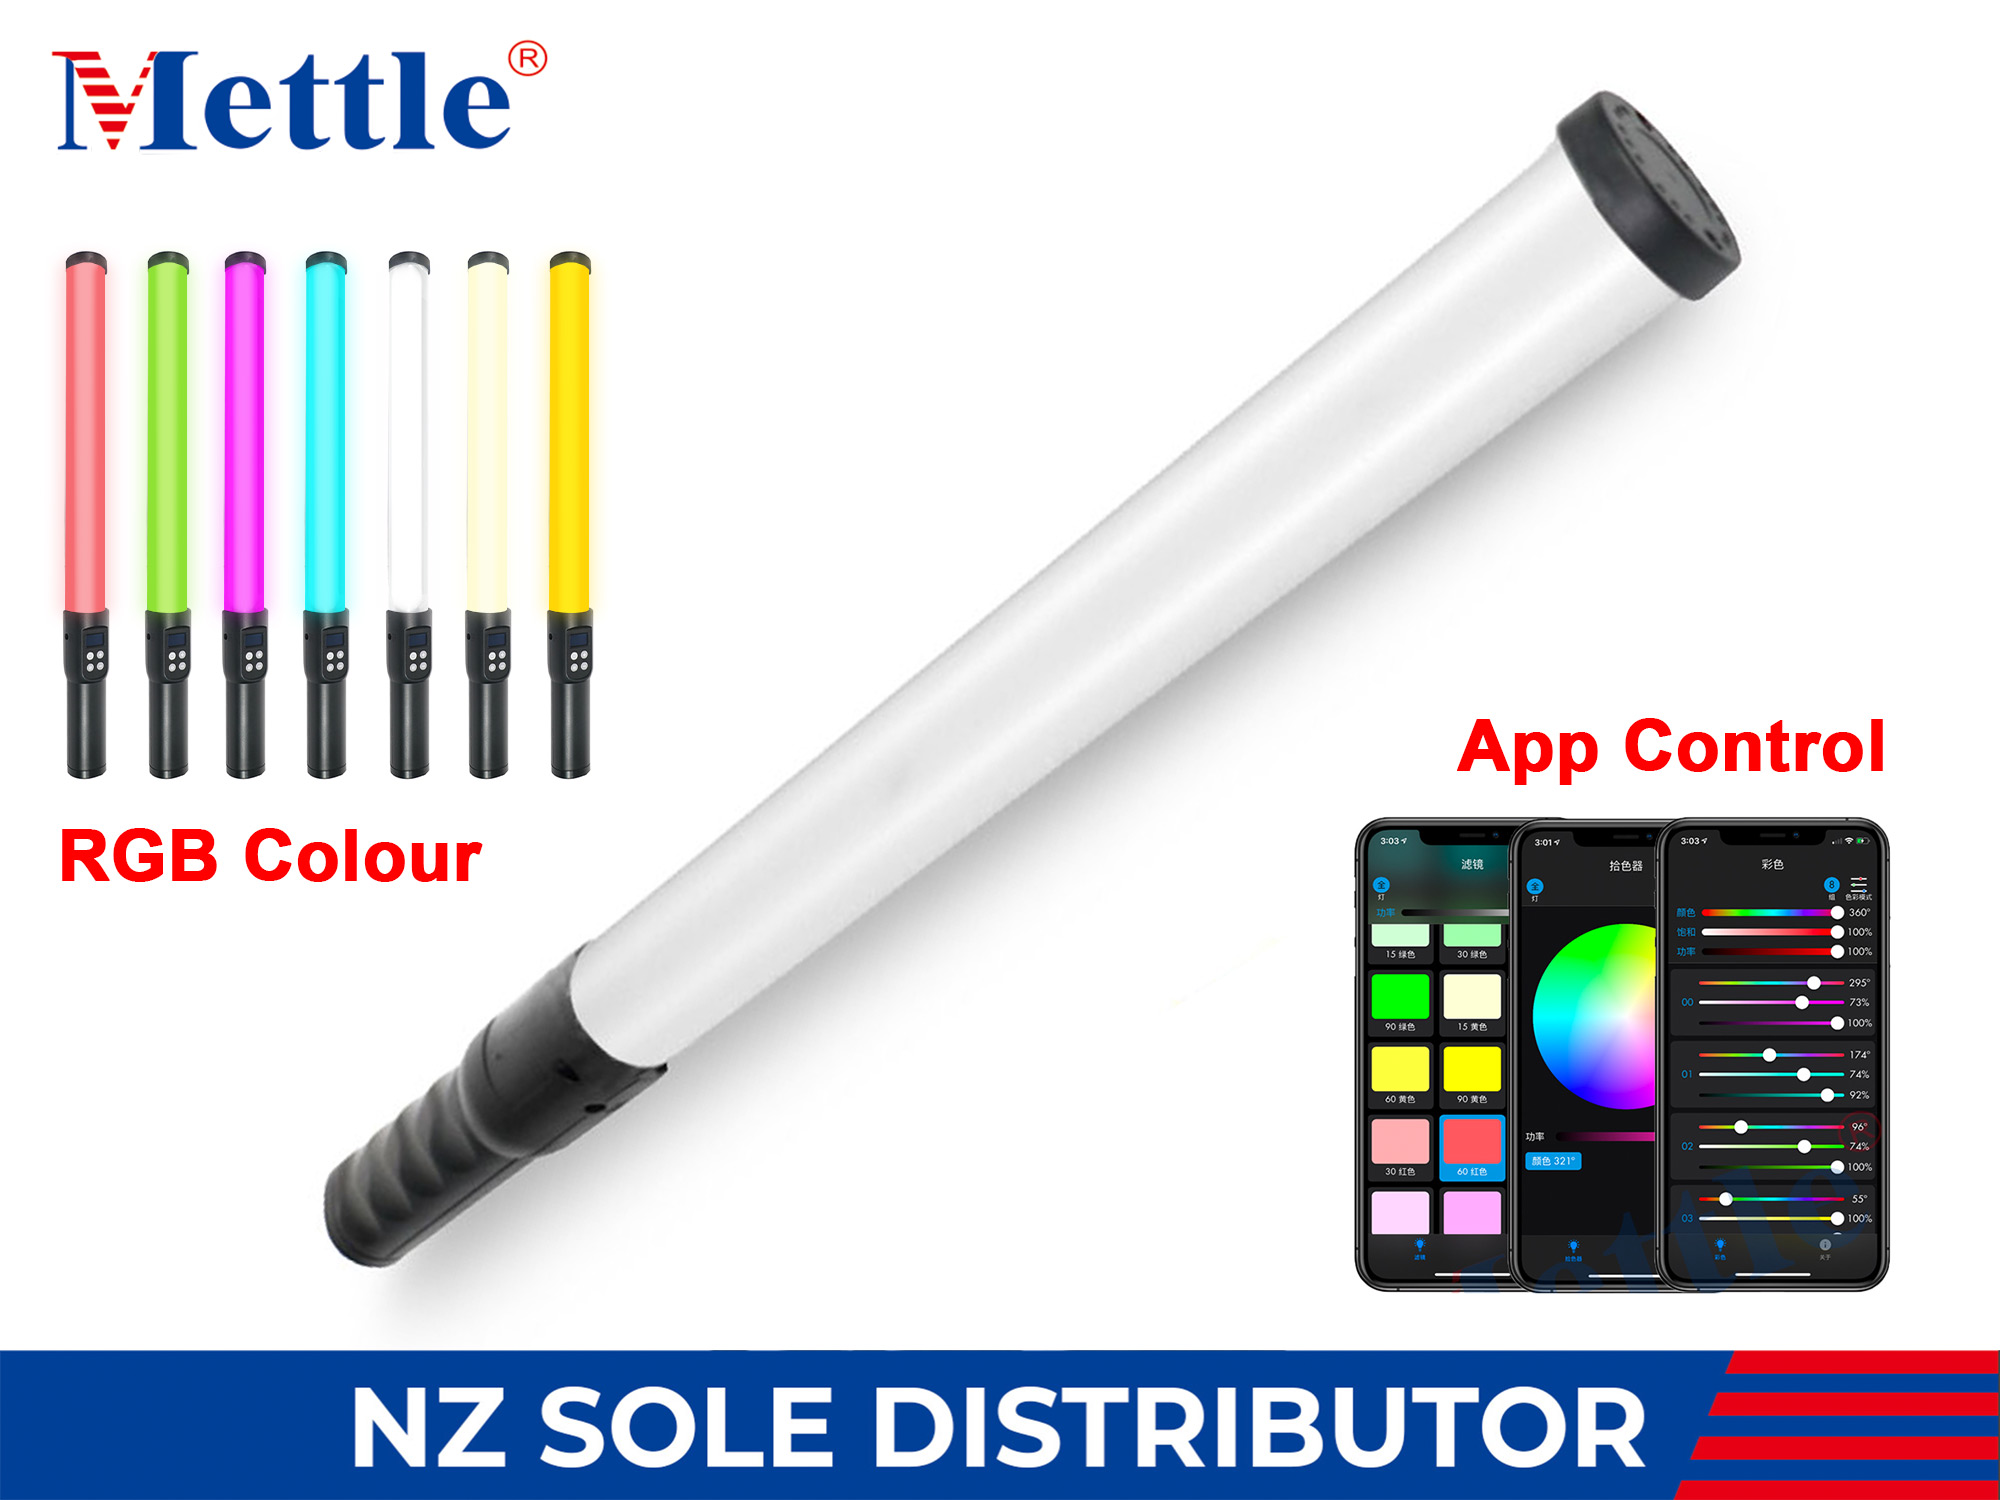 Mettle RGB LED Light Stick LS-400C (582mm)